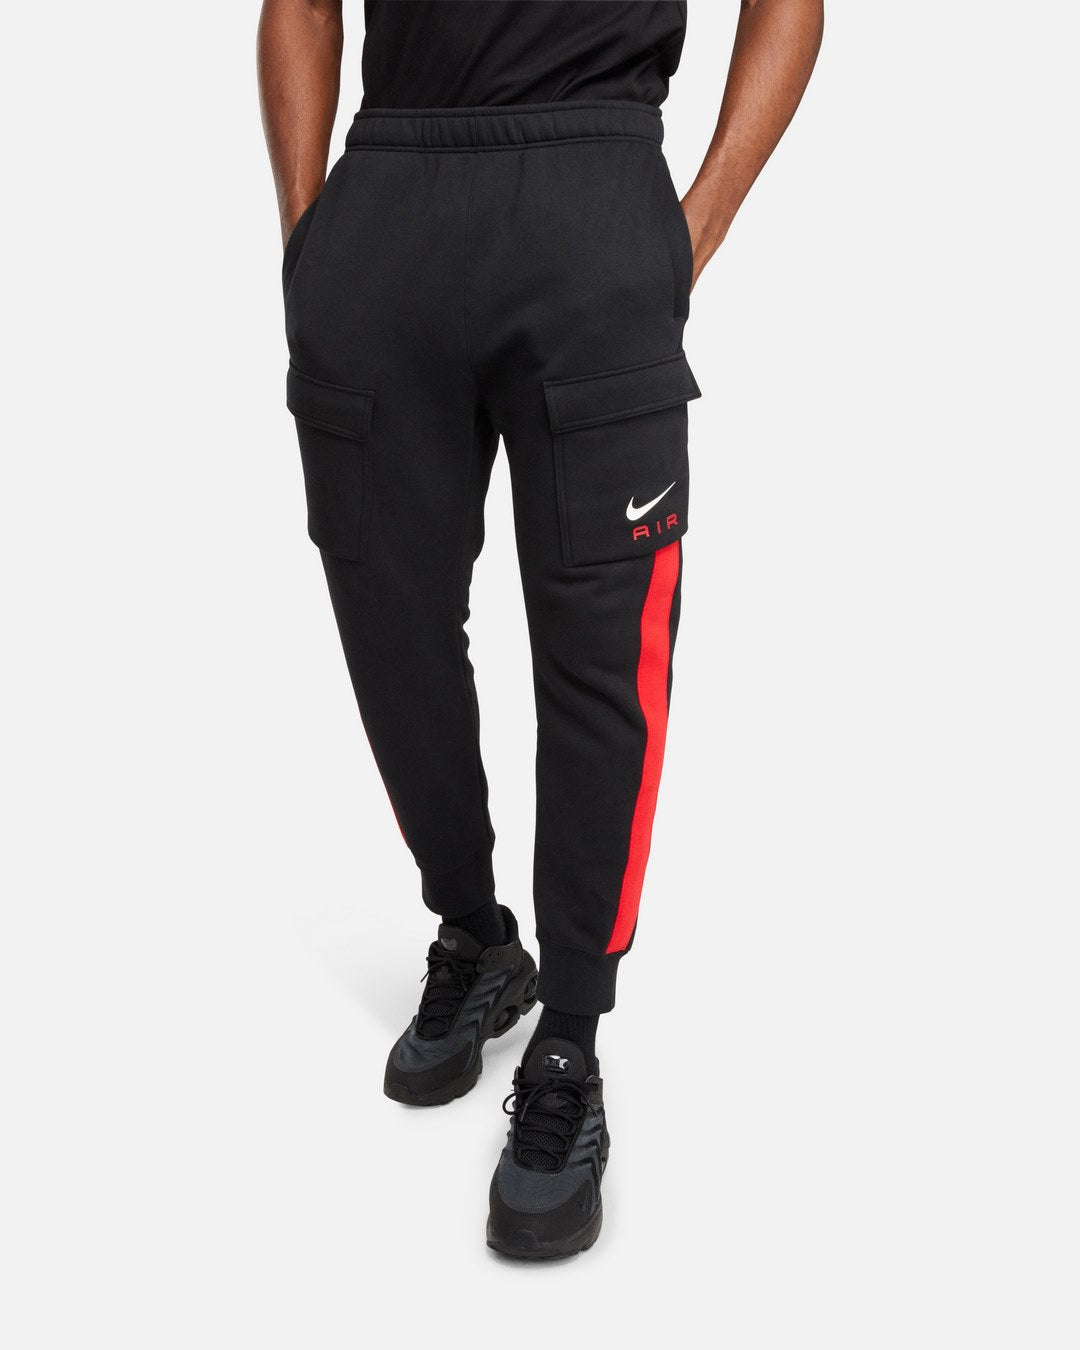 Pantaloni Nike Air - Nero/Rosso